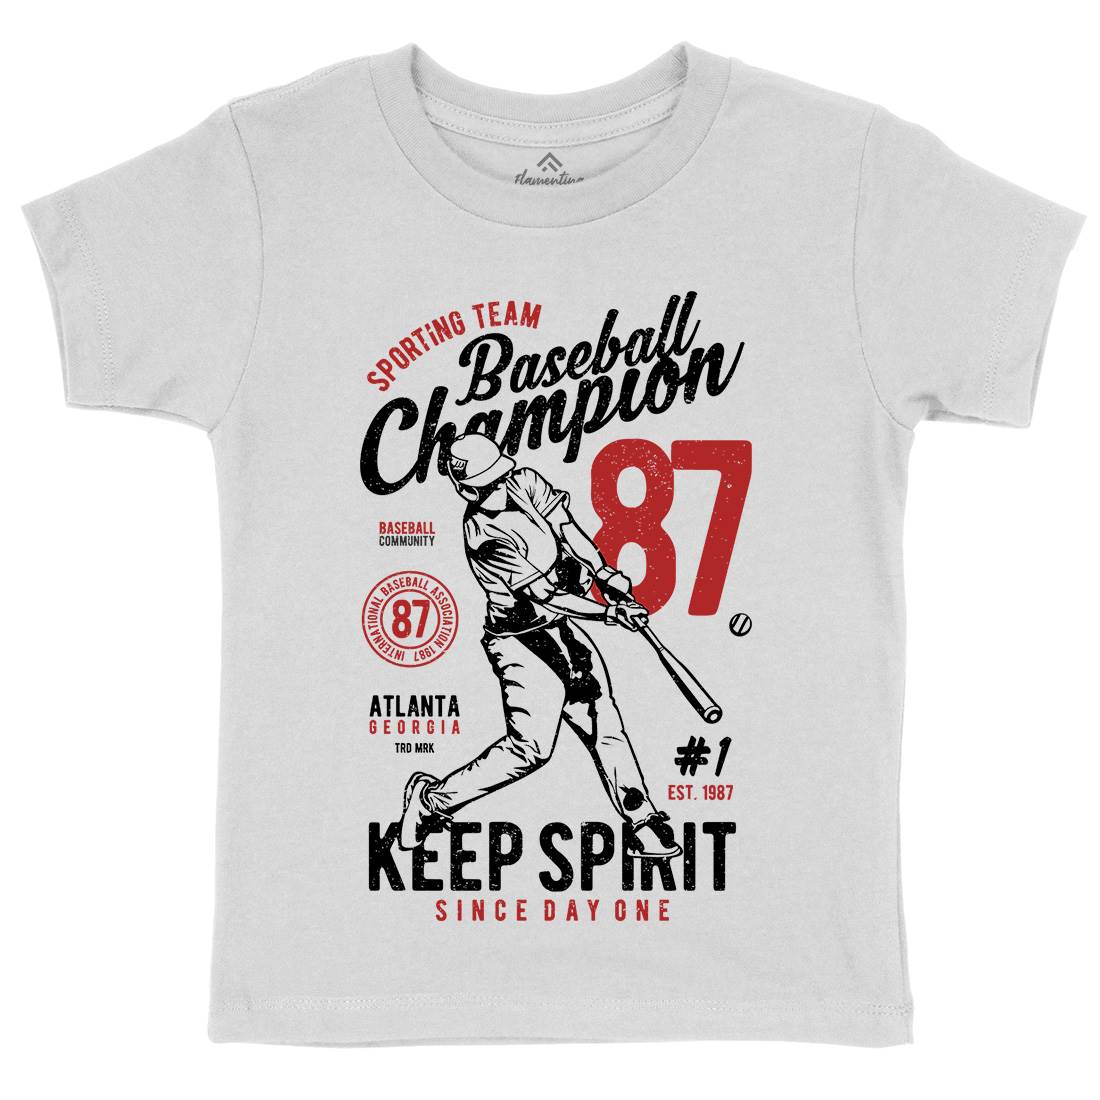 Baseball Champion Kids Crew Neck T-Shirt Sport A616